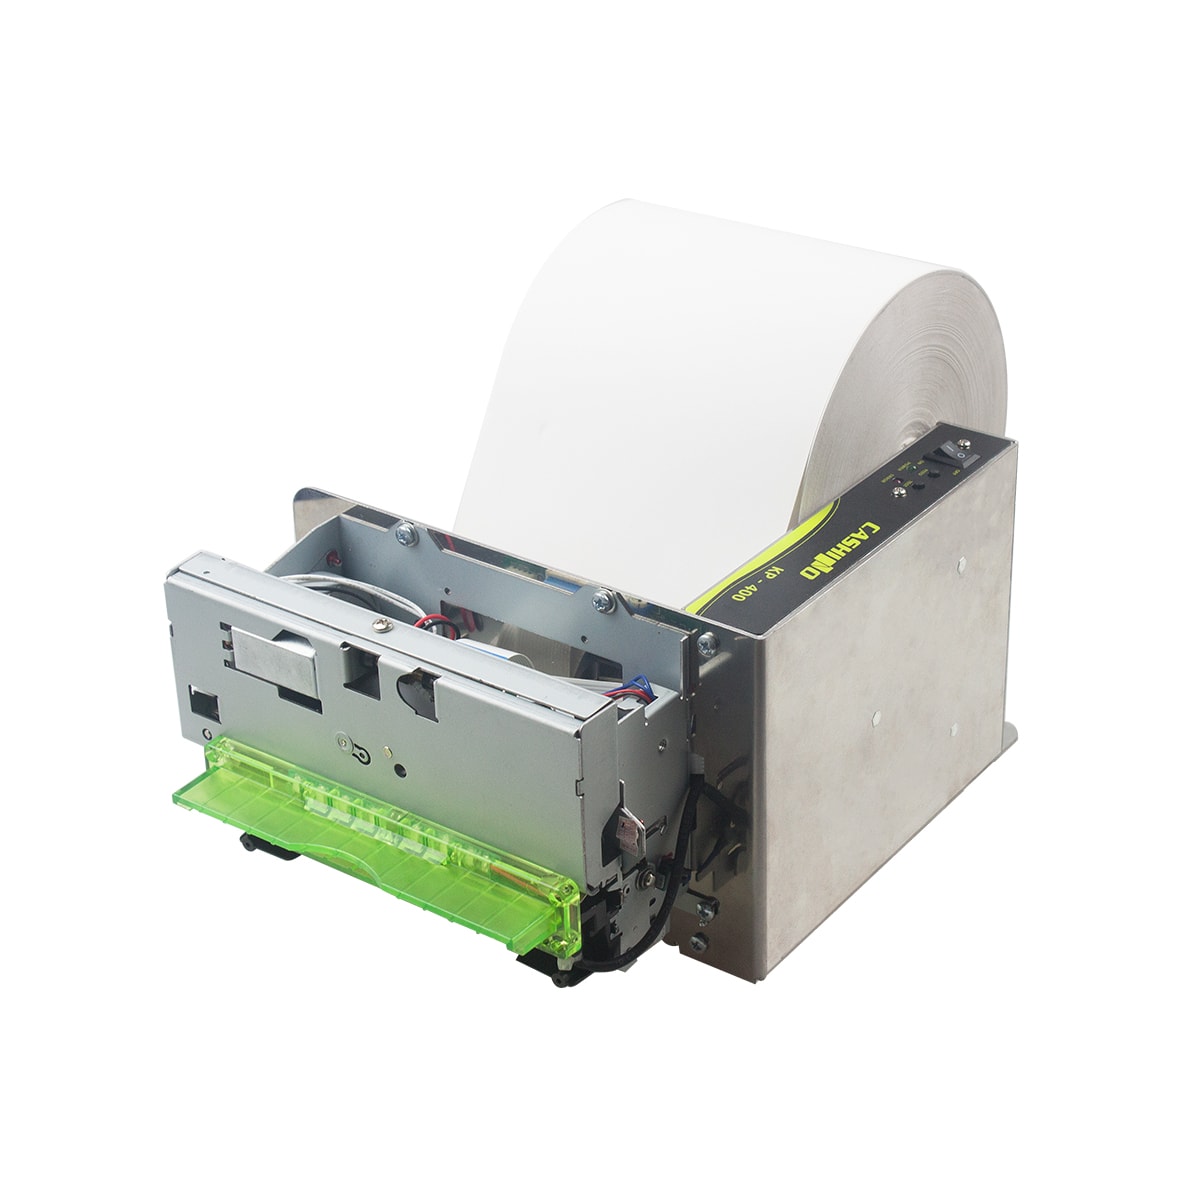 4-calowa termiczna drukarka kioskowa KP-400
